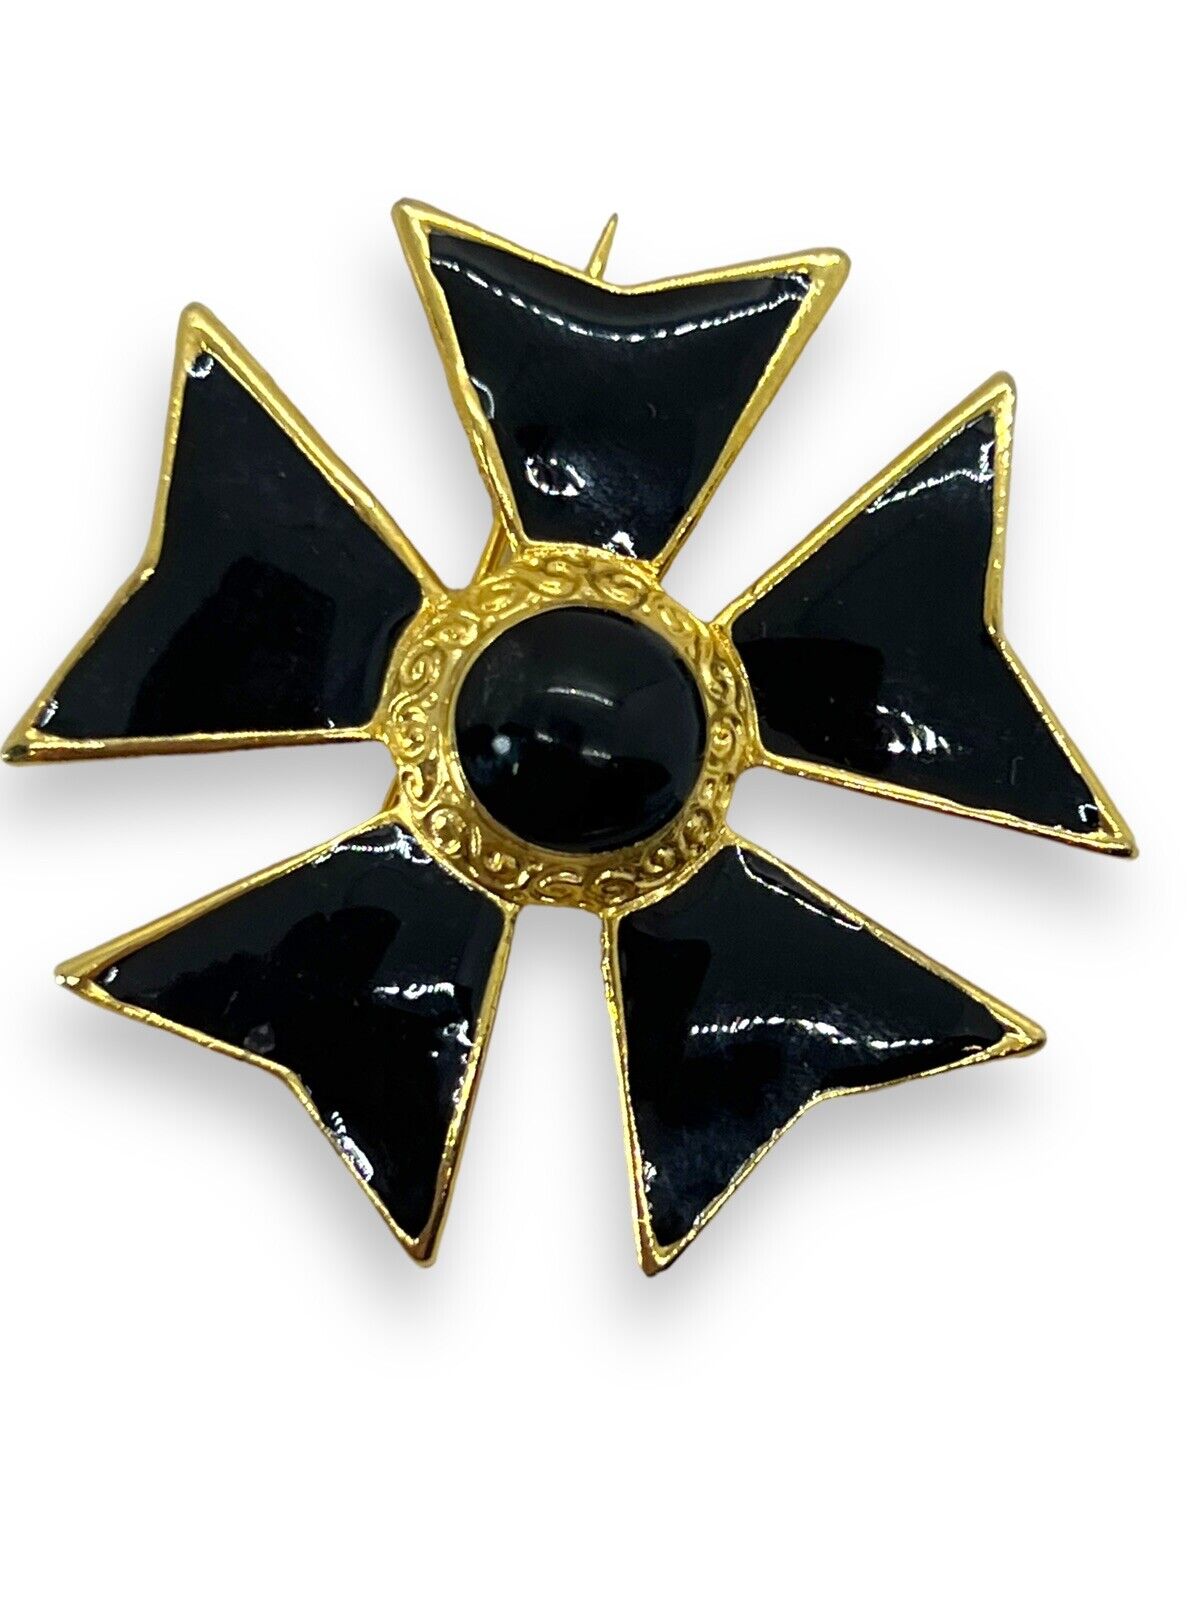 Anne Klein Black Enamel & Gold Tone Brooch Maltese Cross Legion Of Honor Style